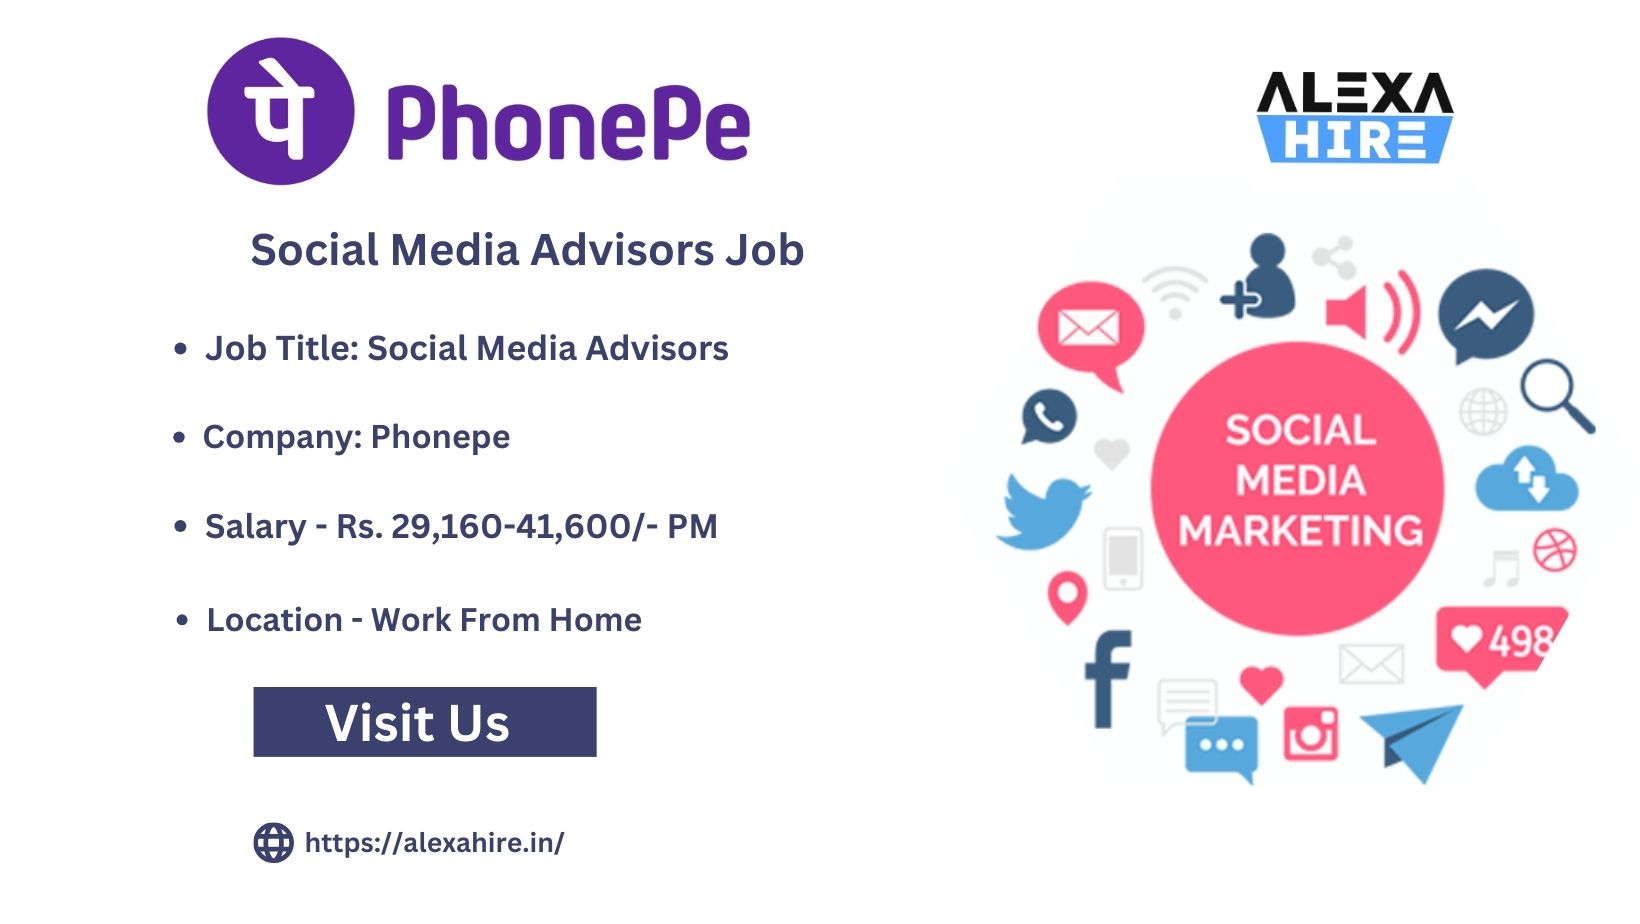 PhonePe is Hiring Social Media Advisors Job| Apply Right Now